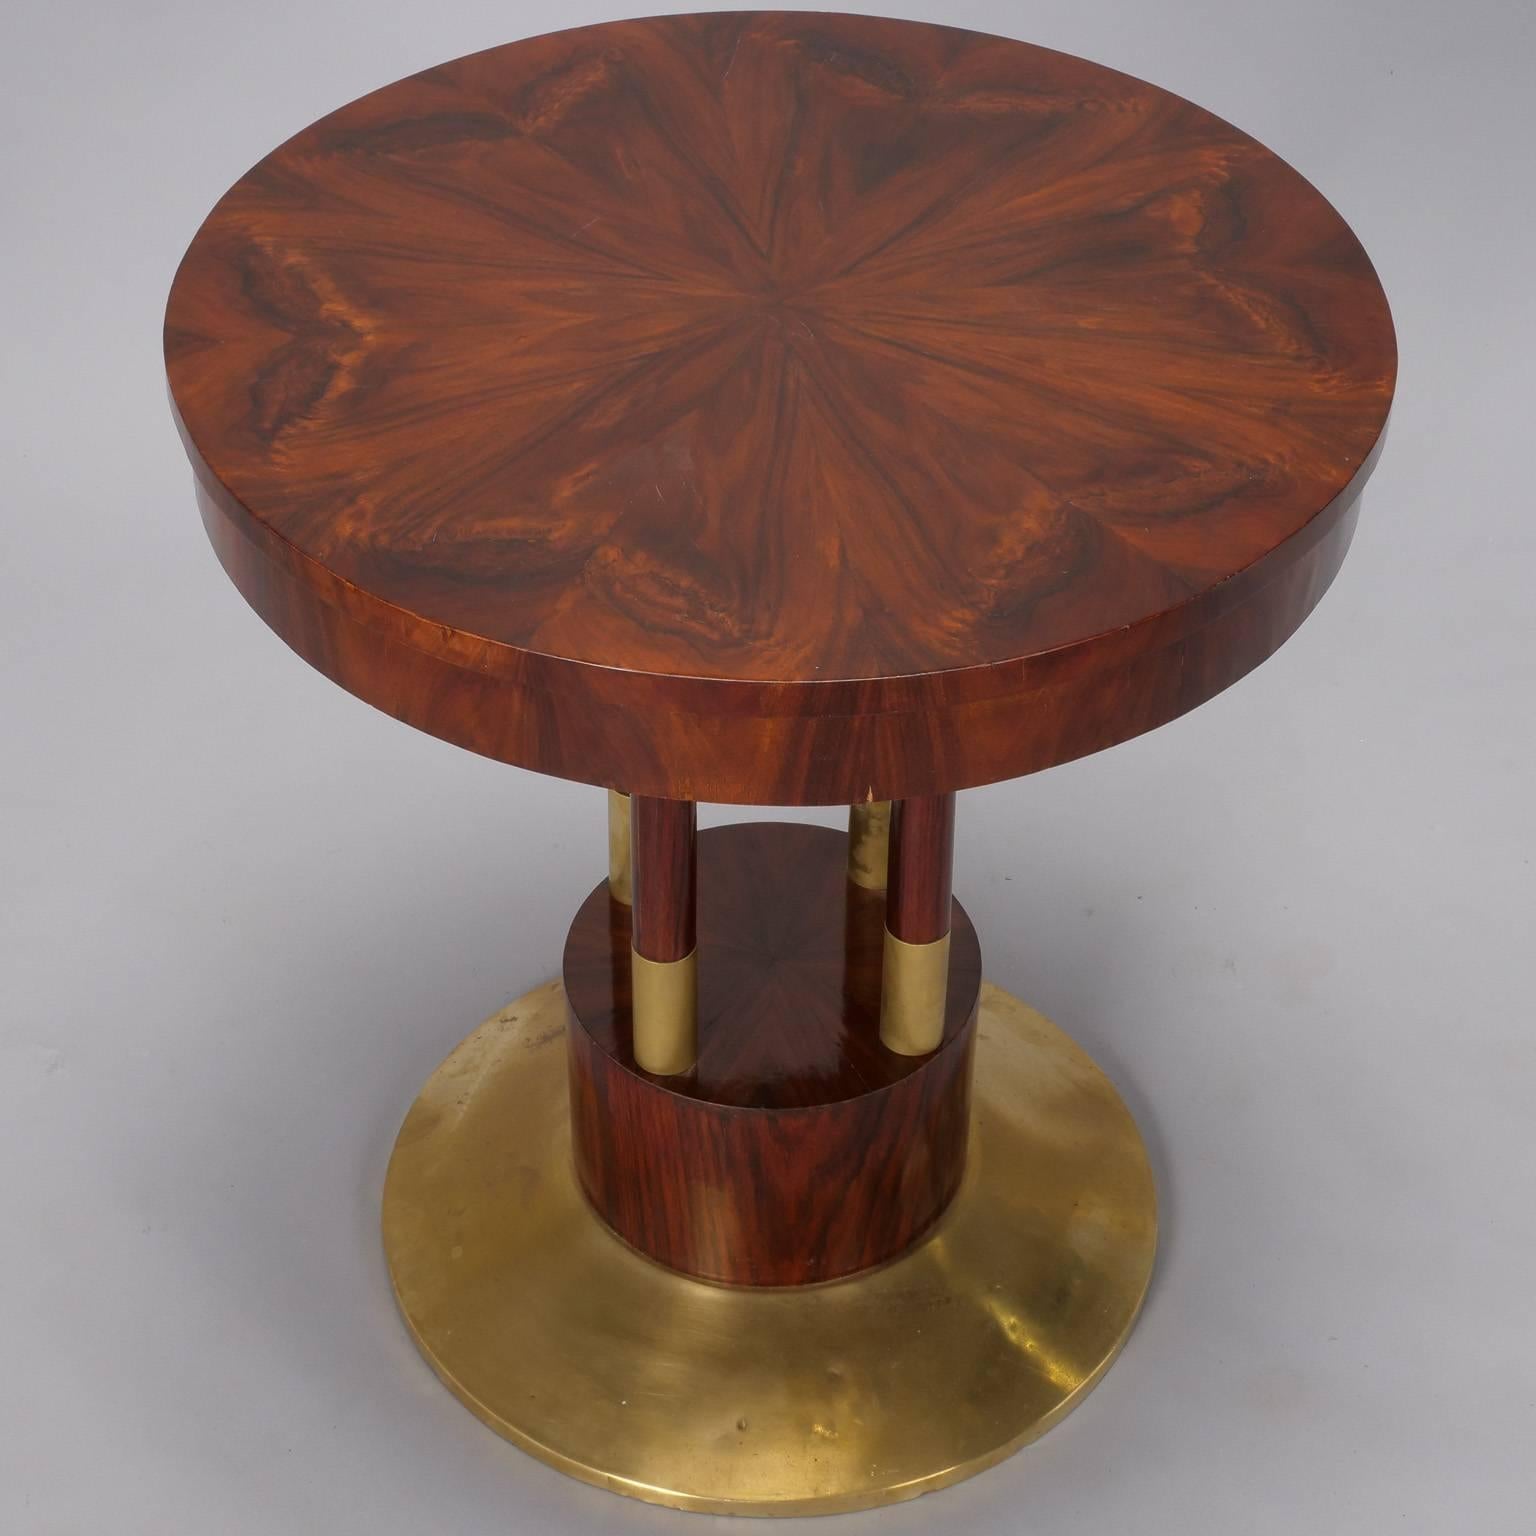 20th Century Round Jugendstil Rosewood and Brass Pedestal Table